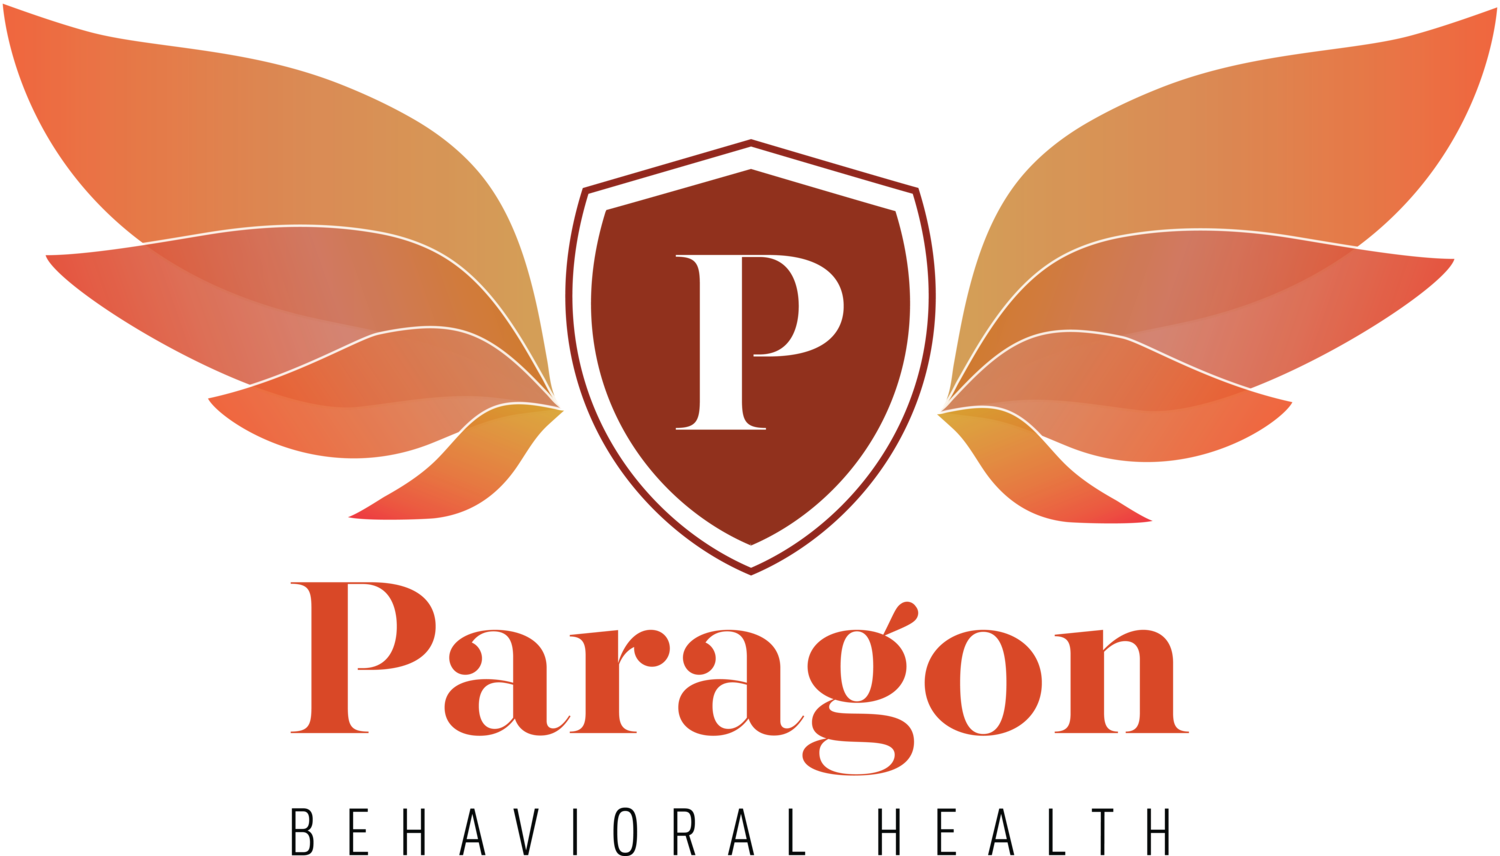 Paragon Behavioral Health Services